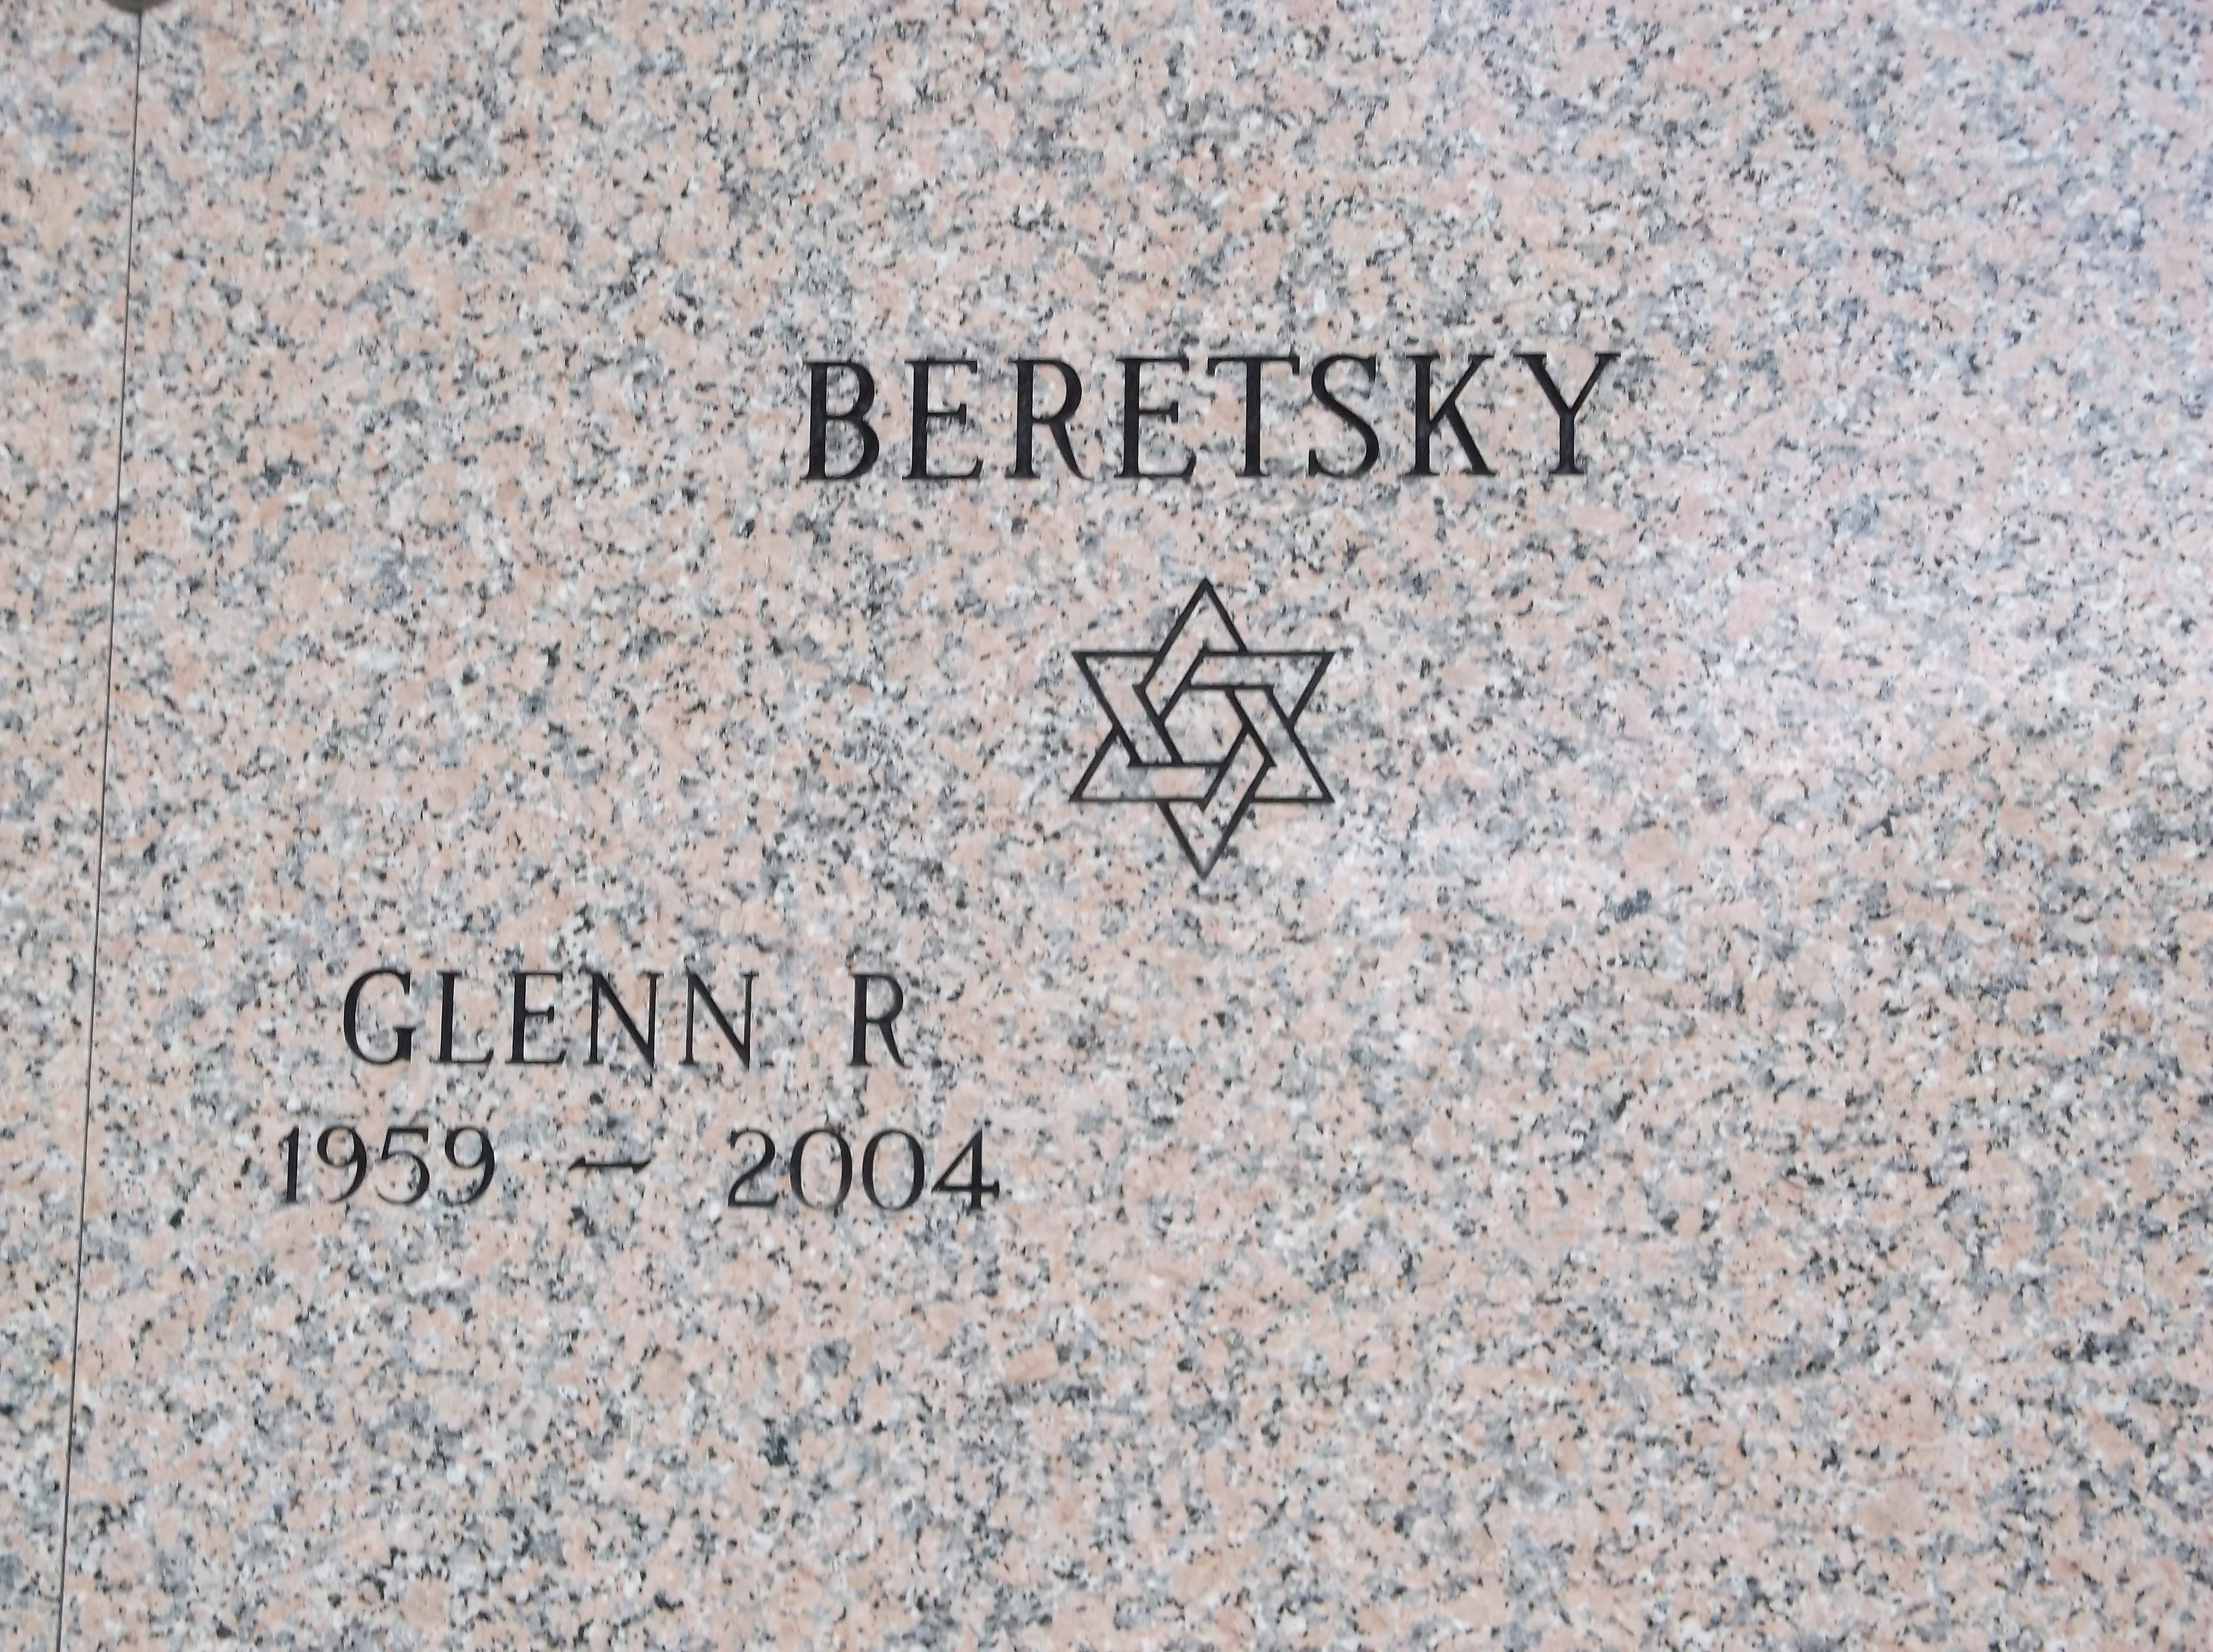 Glenn R Beretsky